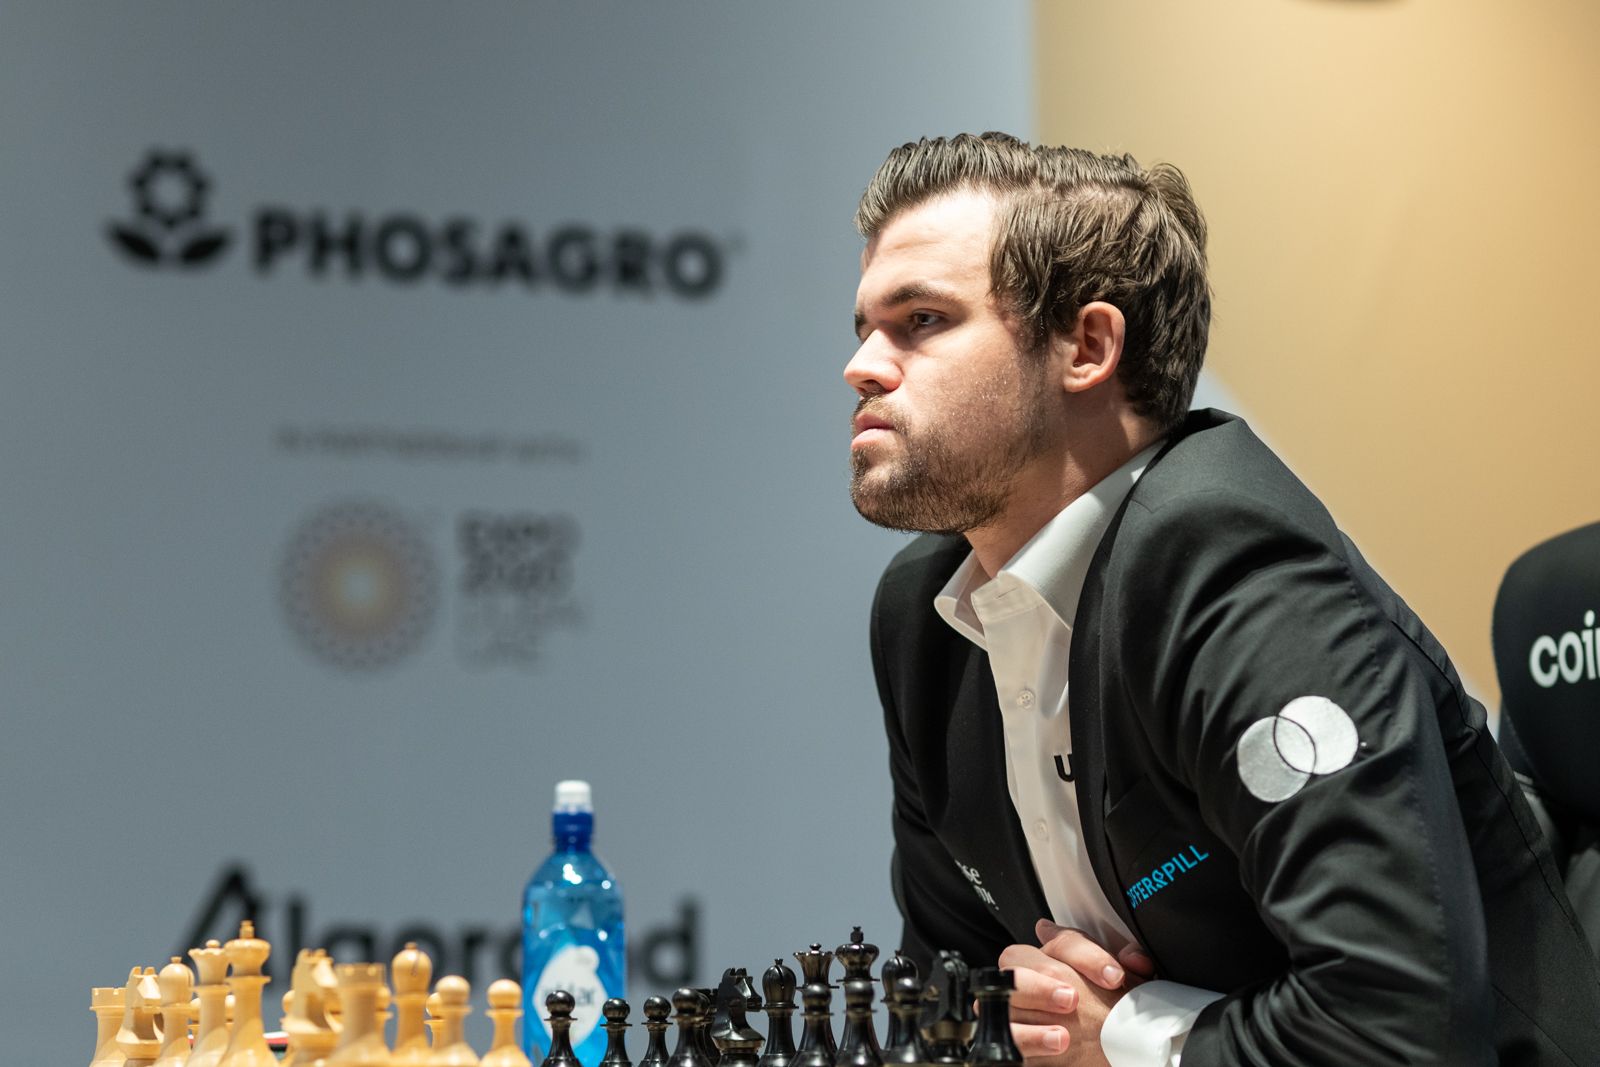 FIDE World Chess Championship 2021: Carlsen Defeats Nepomniachtchi